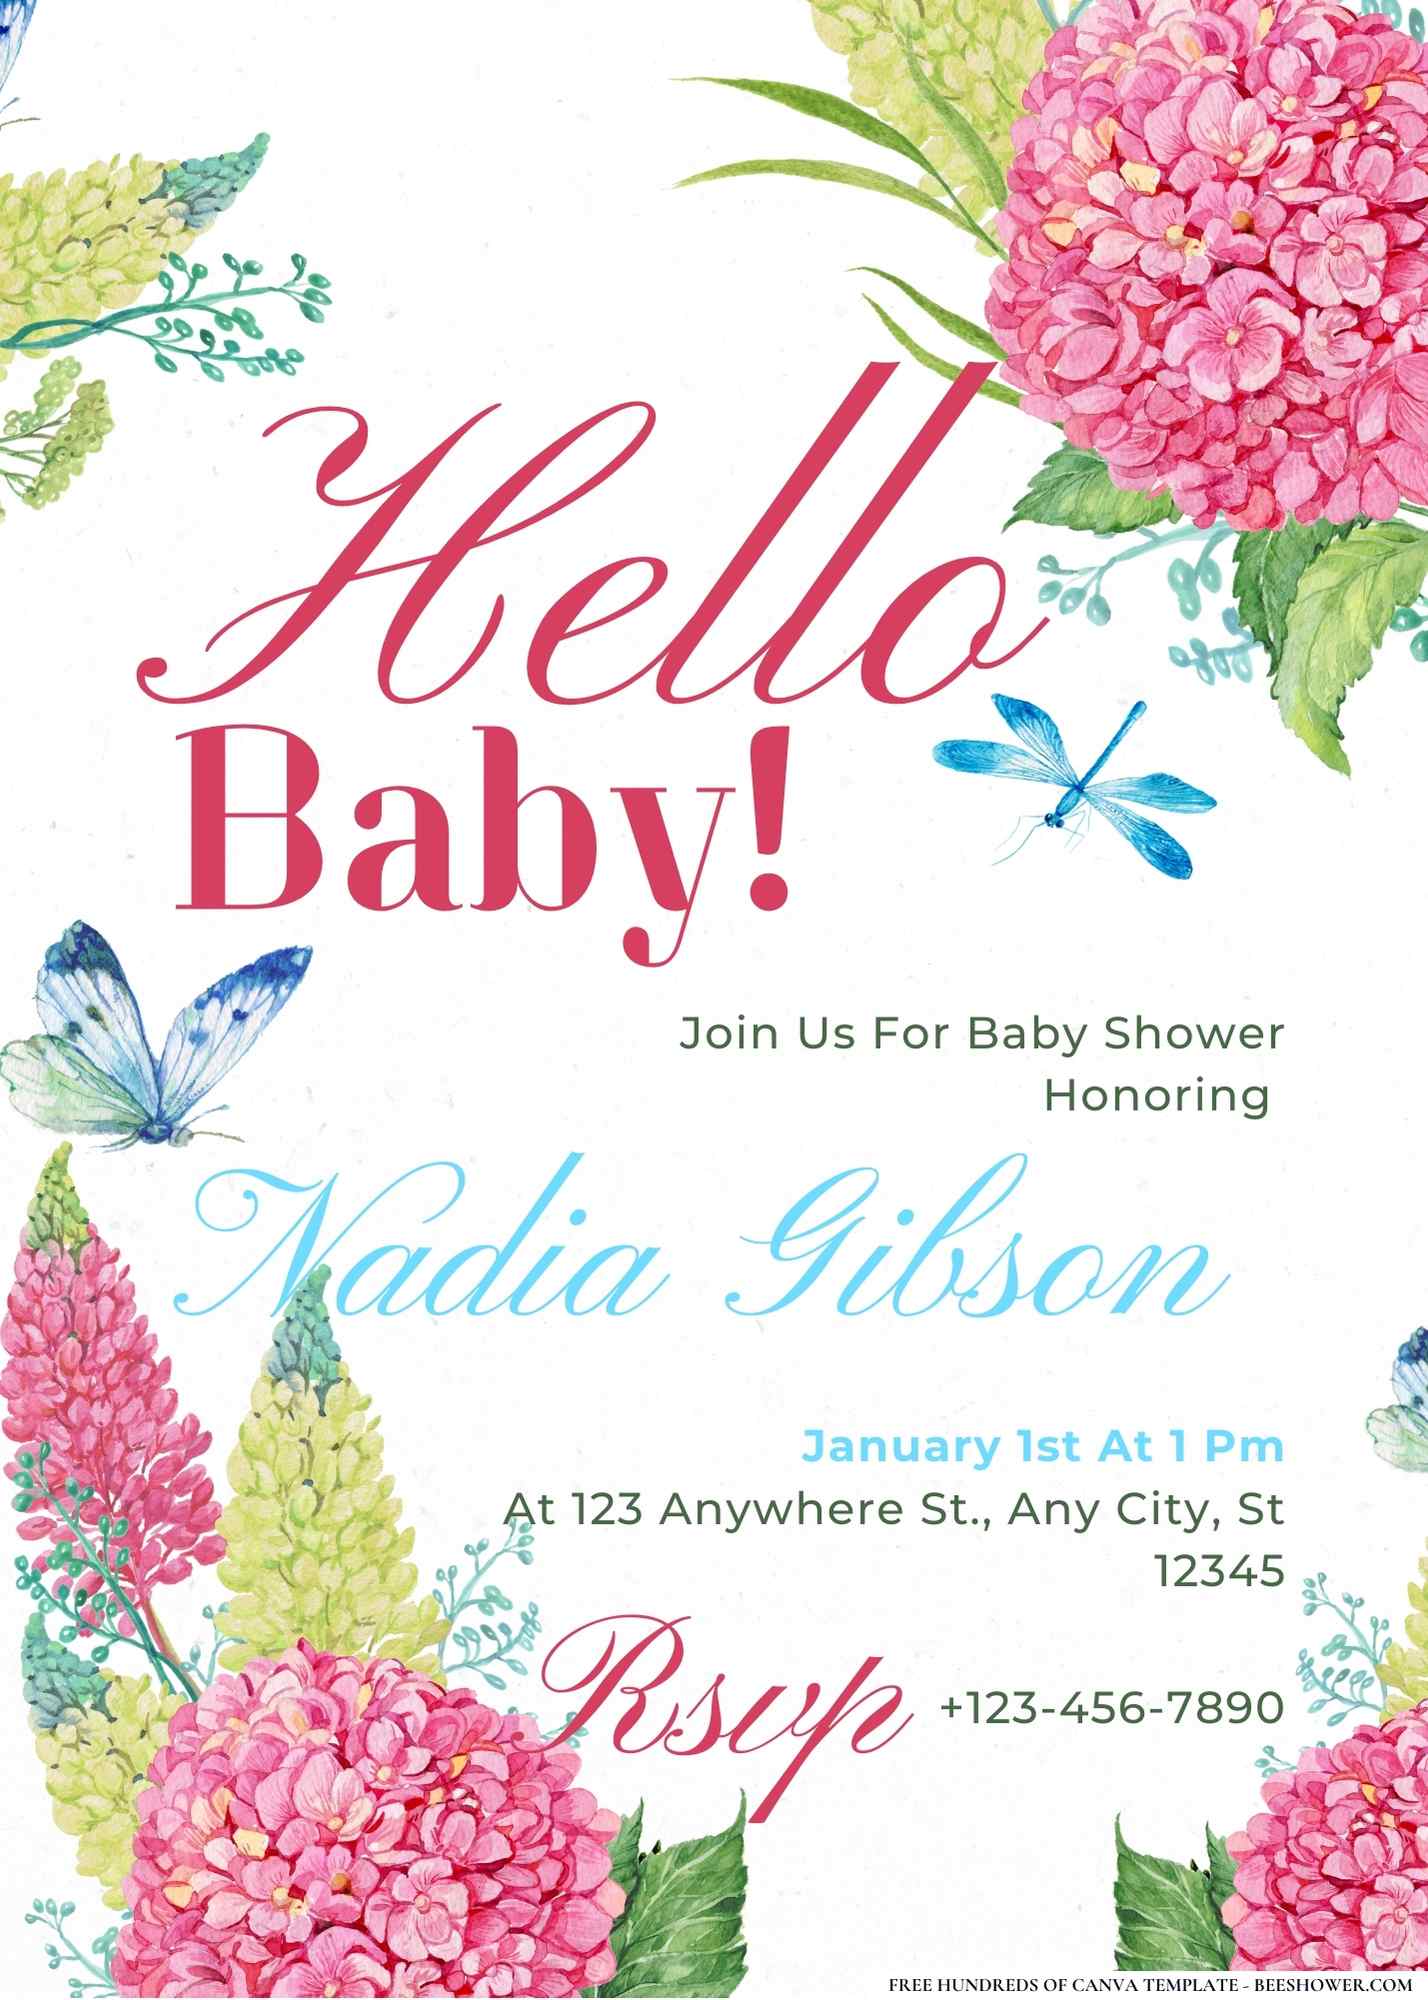 Hydrangea Haven Baby Shower Invitation